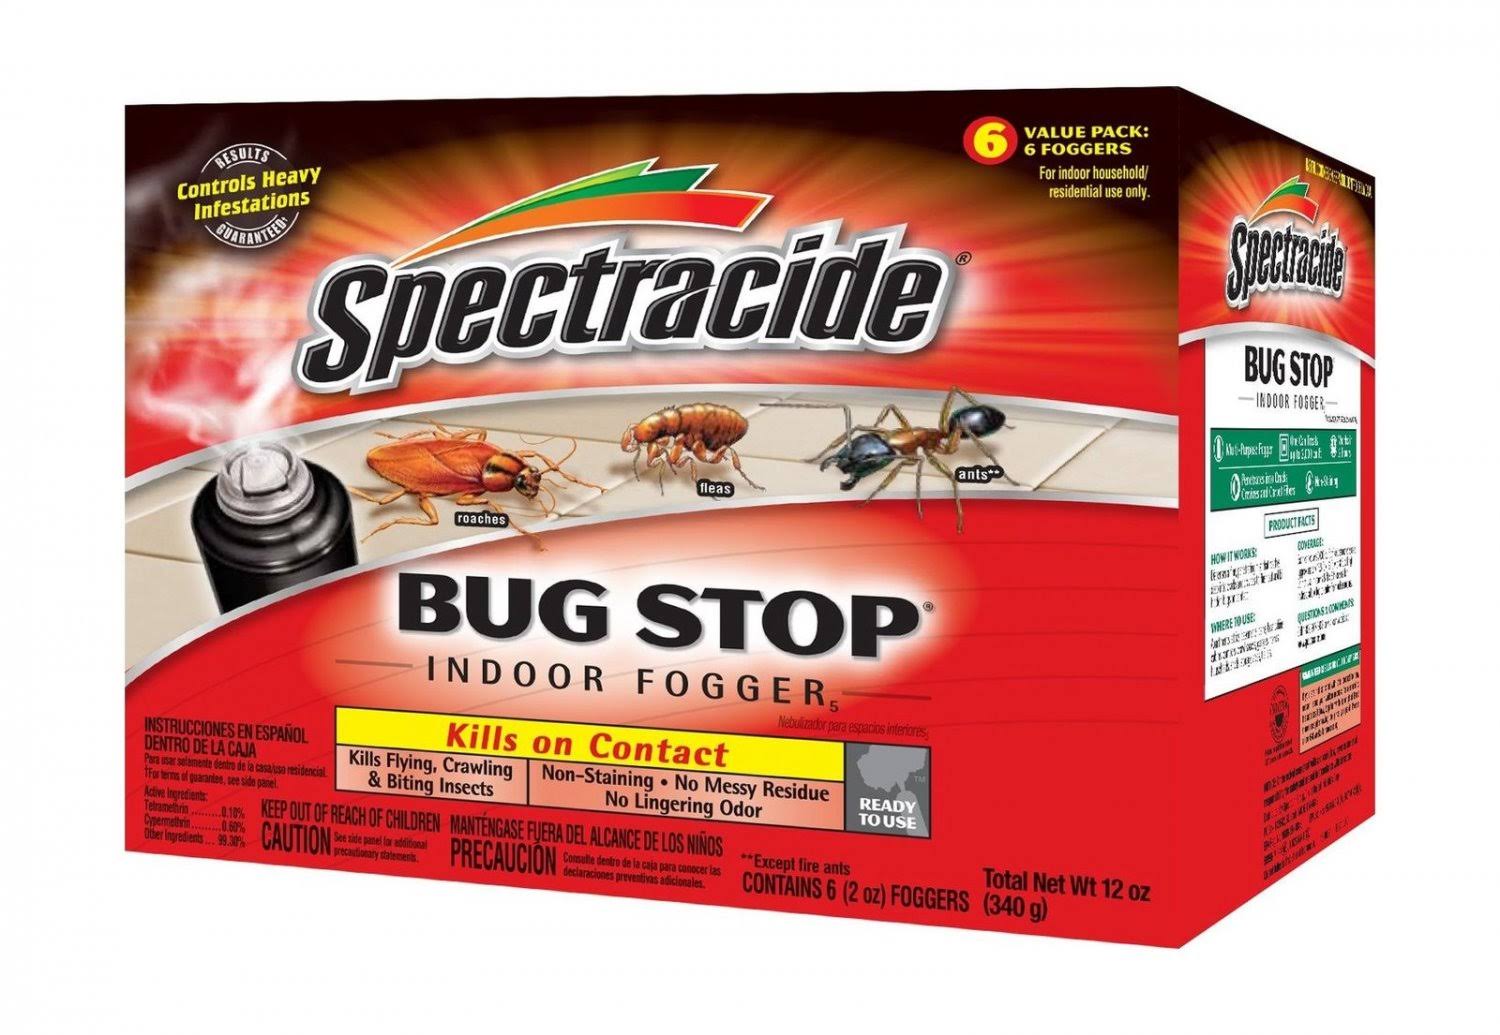 Spectracide Bug Stop Indoor Fogger - 2oz, 6 Count